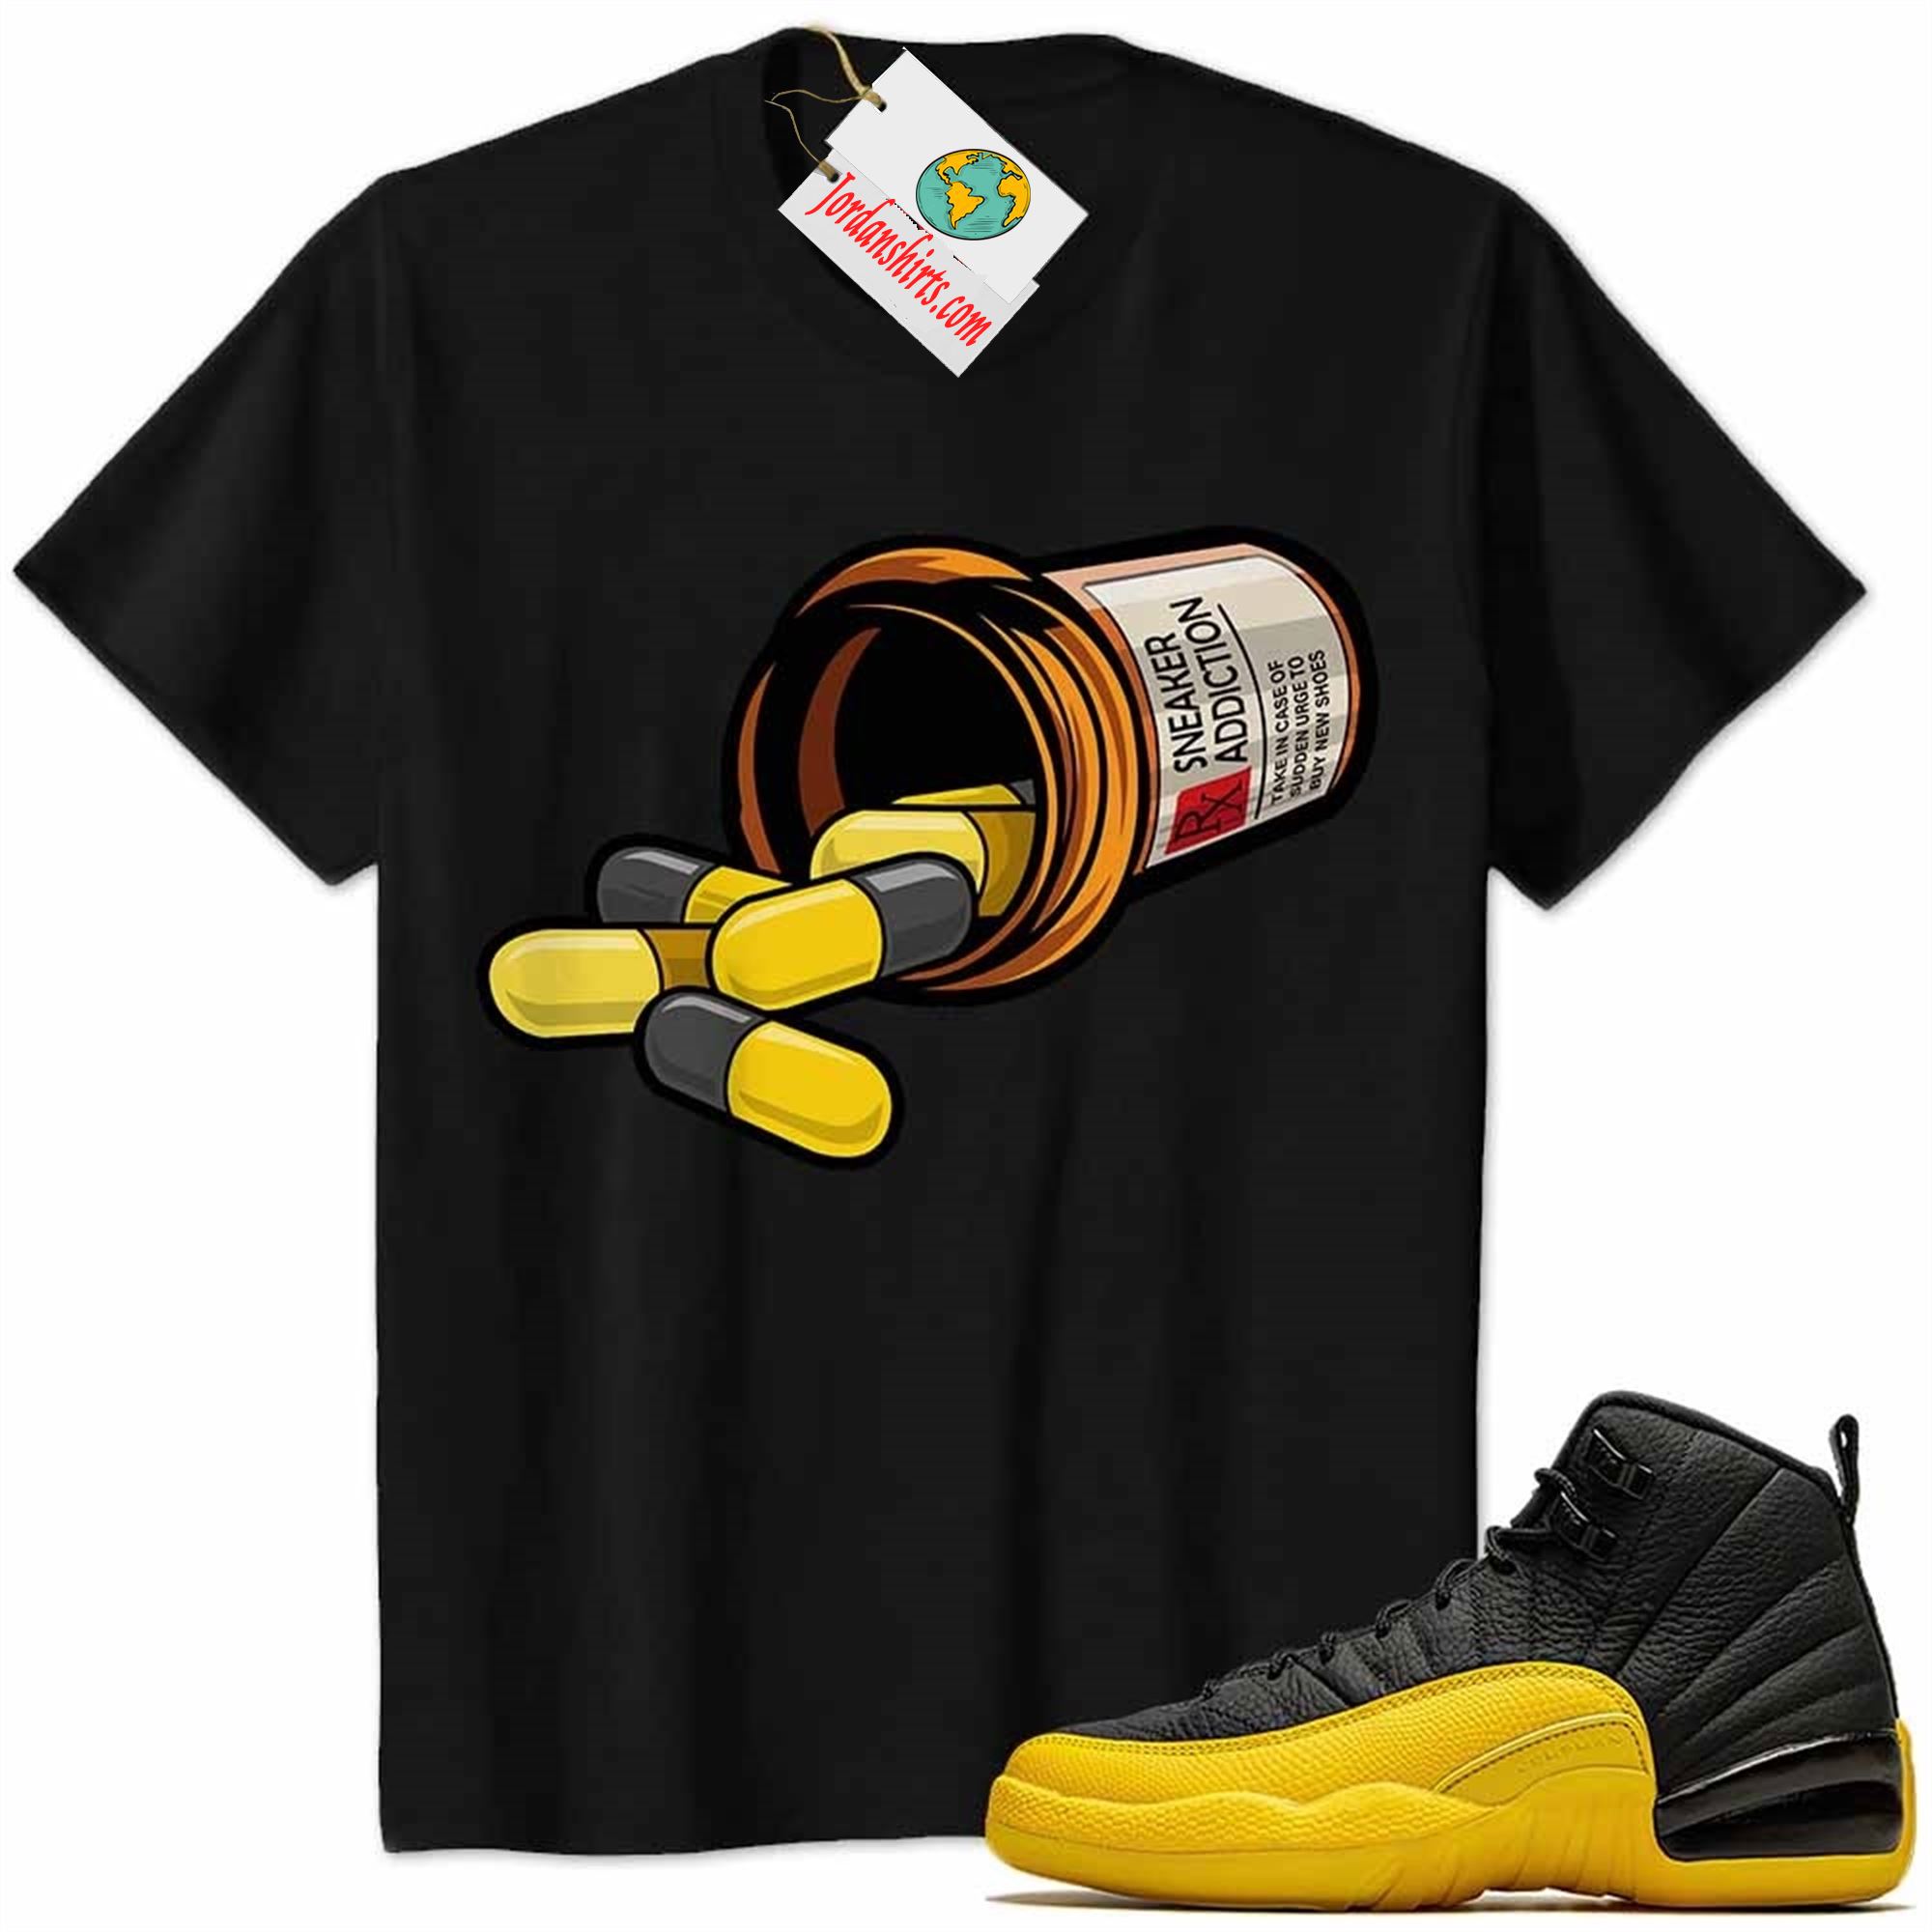 Jordan 12 Shirt, Rx Drugs Pill Bottle Sneaker Addiction Black Air Jordan 12 University Gold 12s Size Up To 5xl